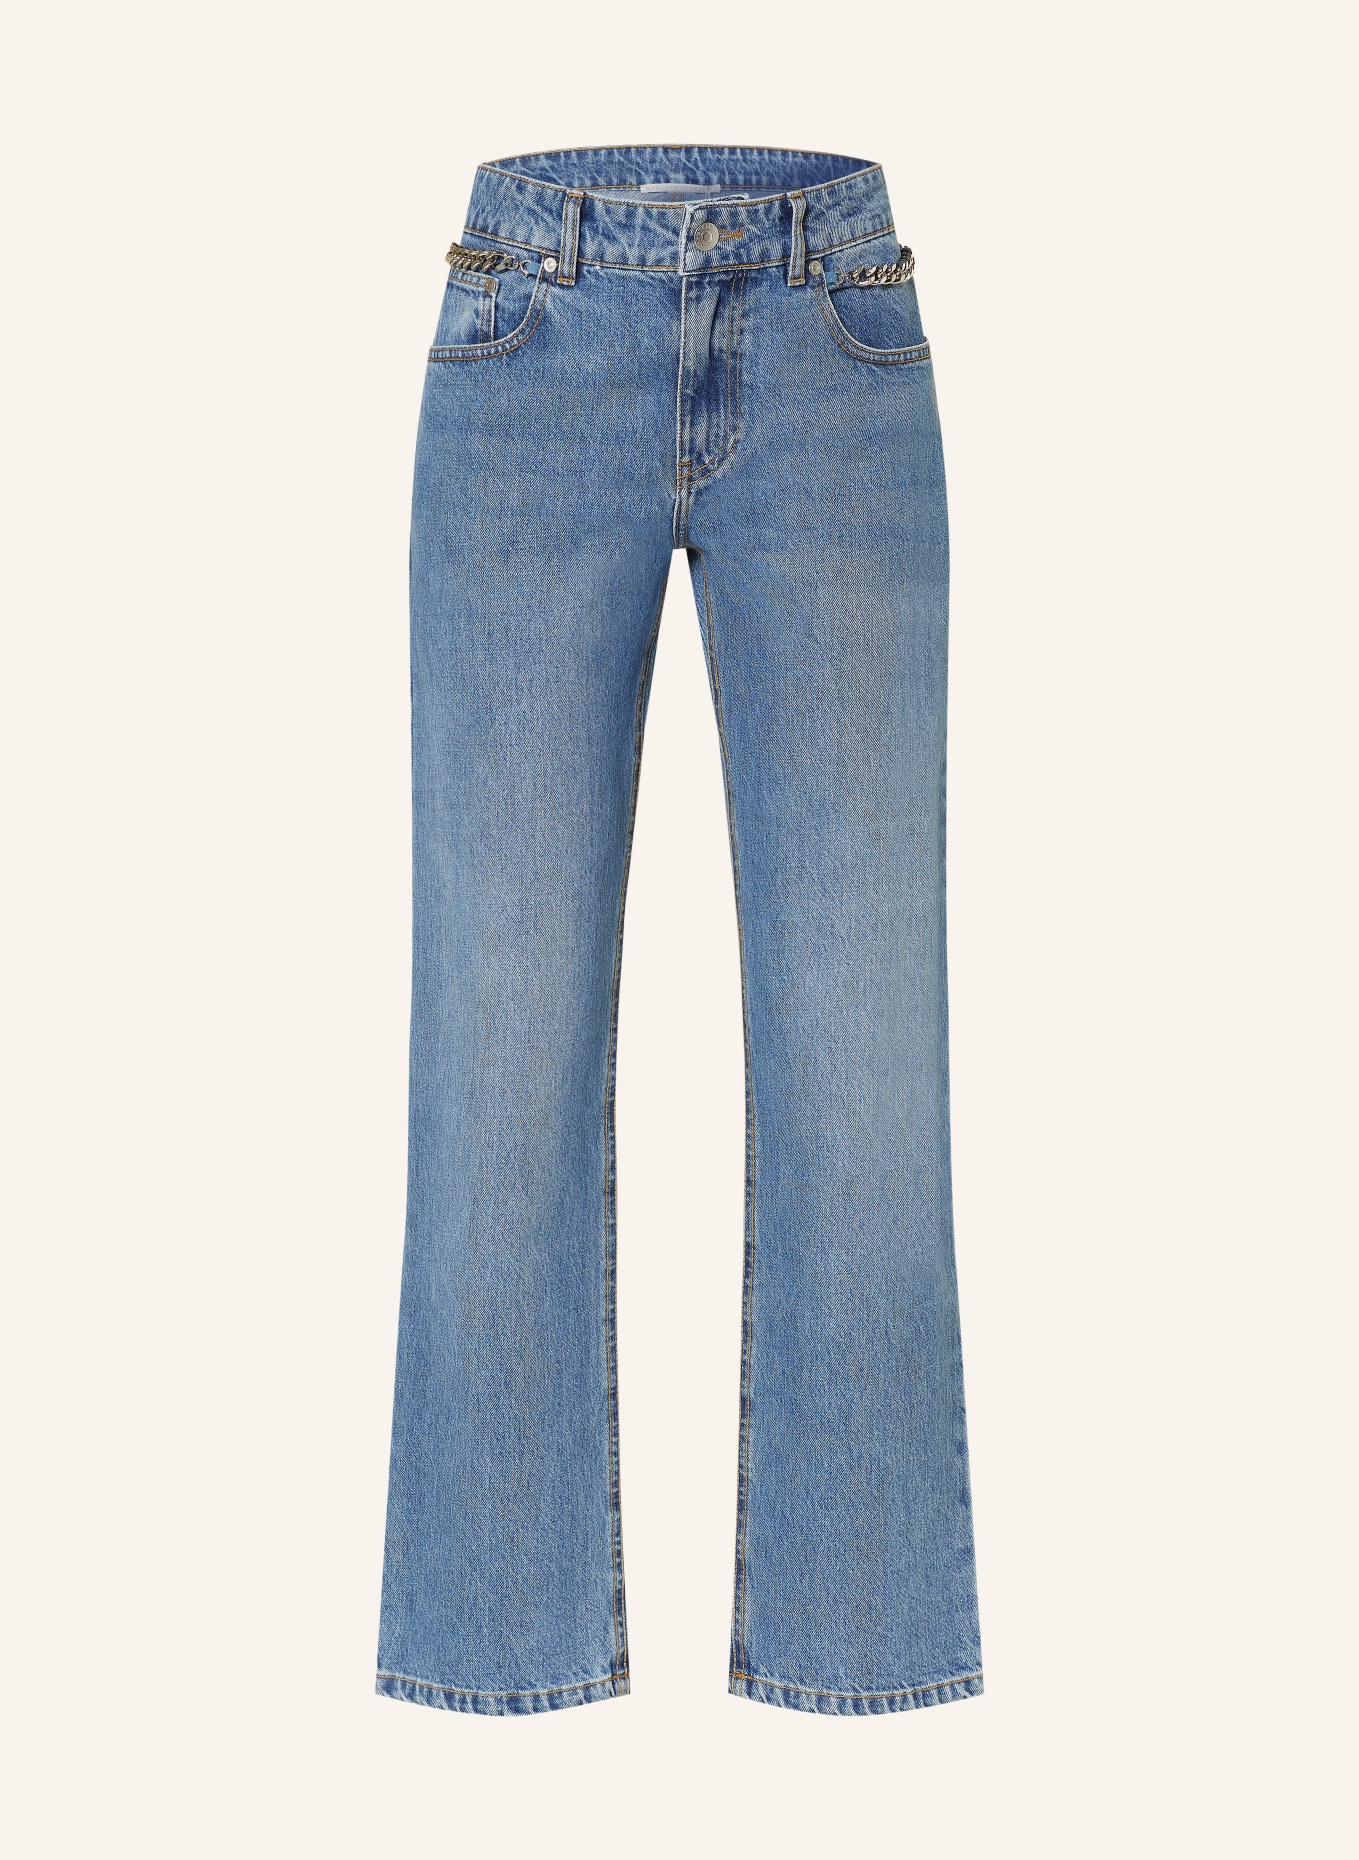 STELLA McCARTNEY Jeans, Farbe: 4599 MID VINTAGE BLUE (Bild 1)